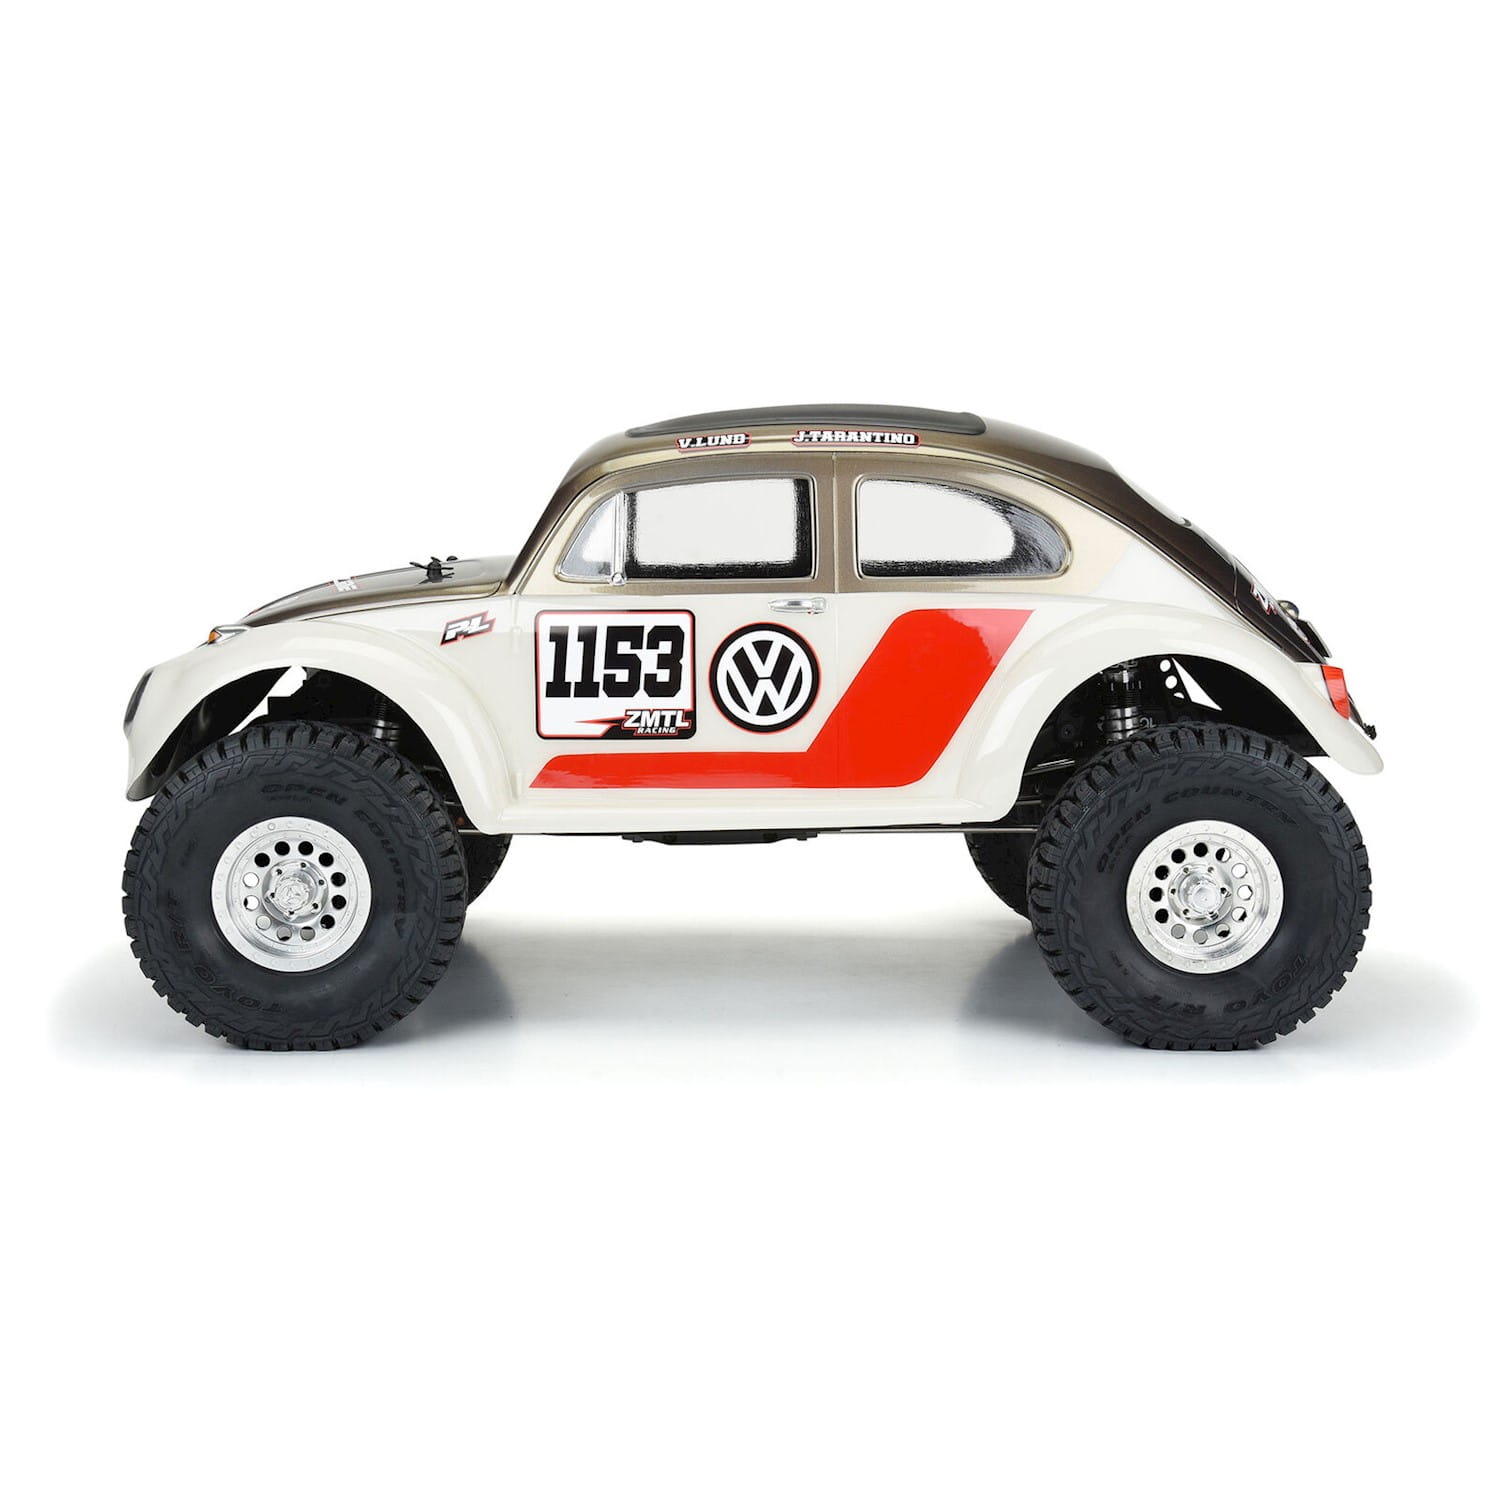 Proline Crawler Karosserie Volkswagen VW Beetle 1:10 unlackiert 12.3" Wheelbase